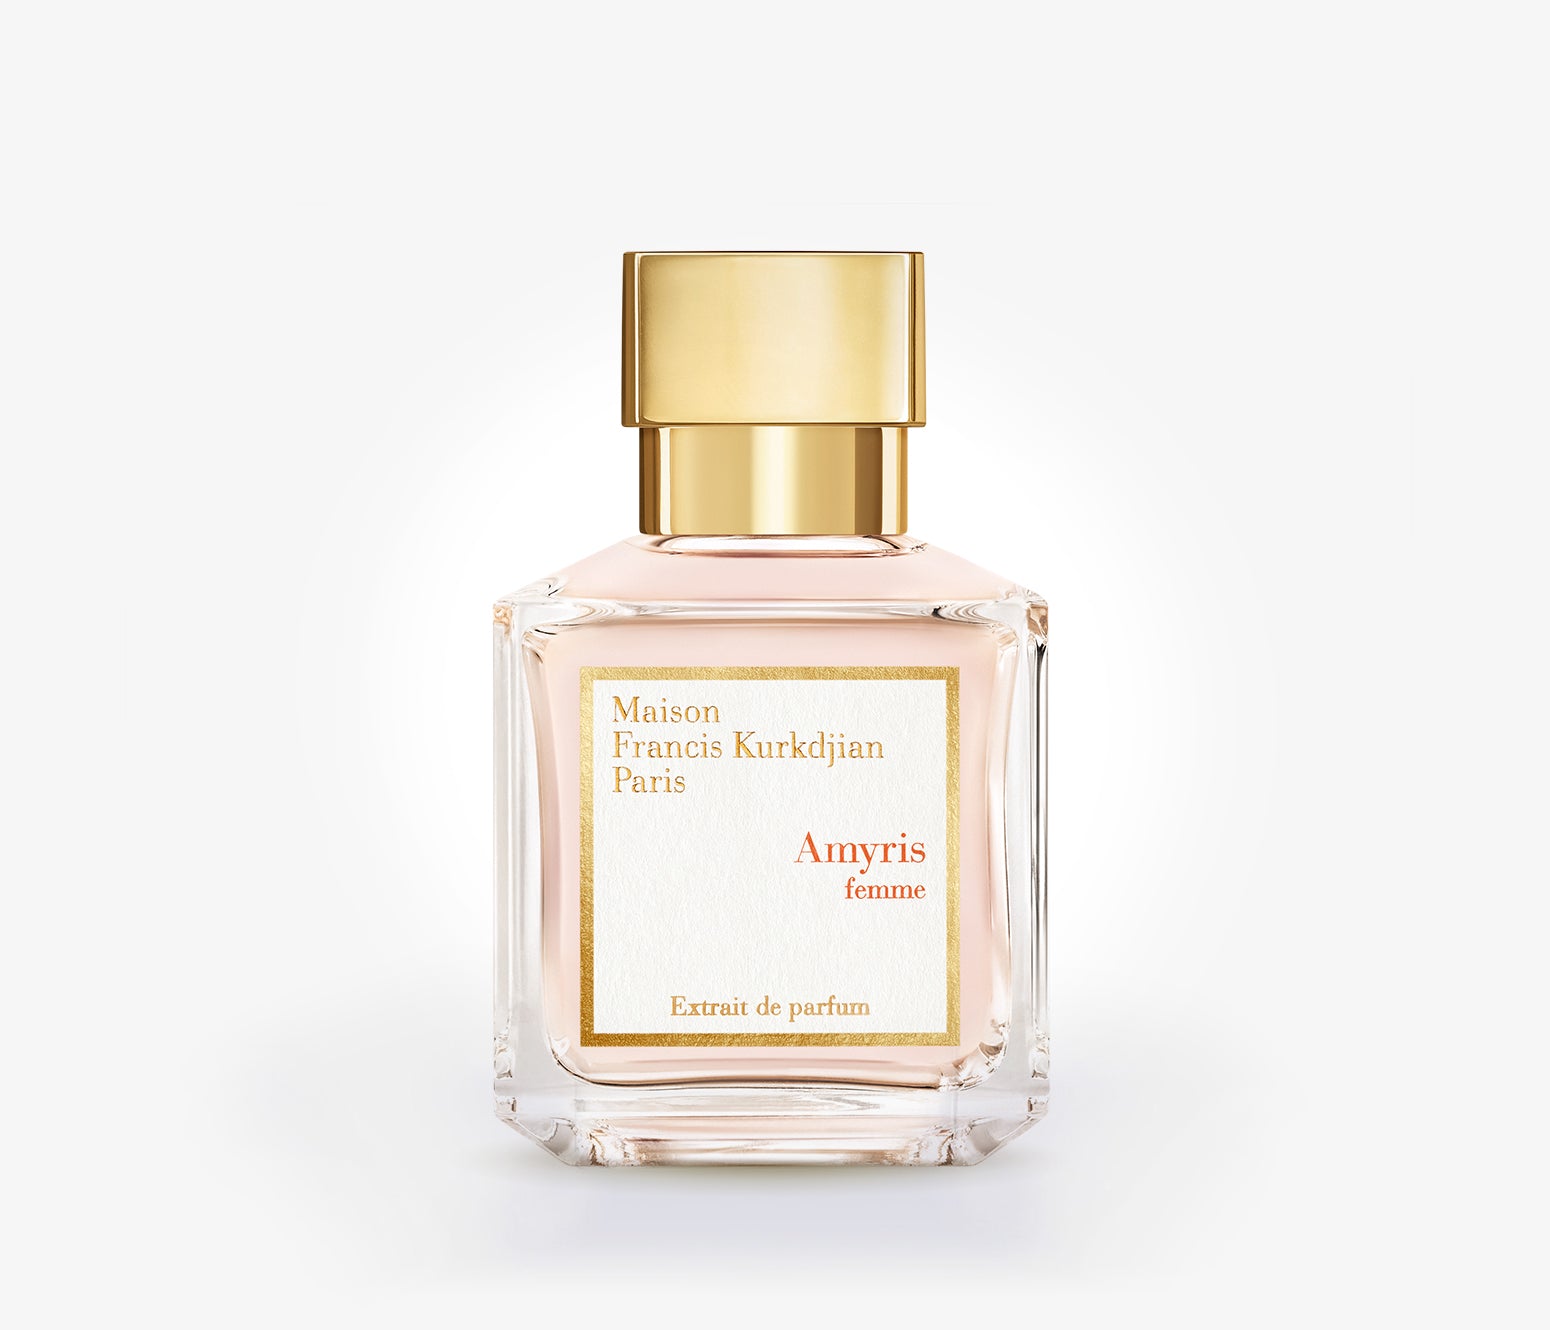 Maison Francis Kurkdjian - Amyris Femme Extrait - 70ml - THF001 - product image - Fragrance - Les Senteurs